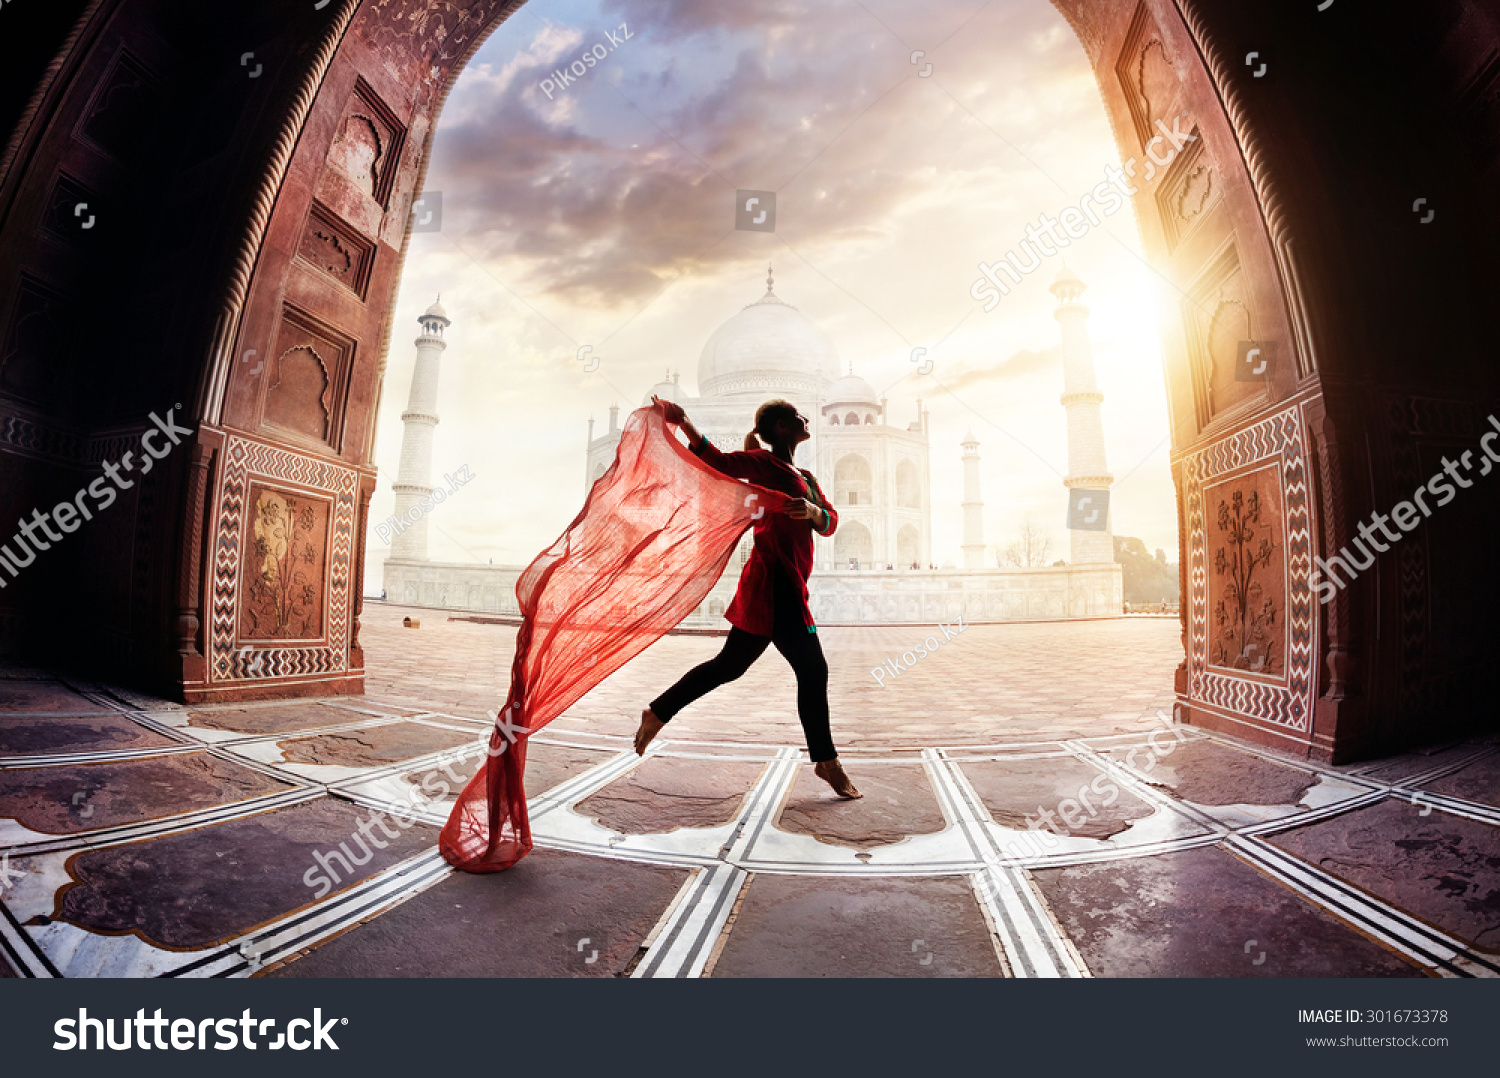 Woman with red scarf dancing near Taj Mahal in Agra, Uttar Pradesh, India #301673378